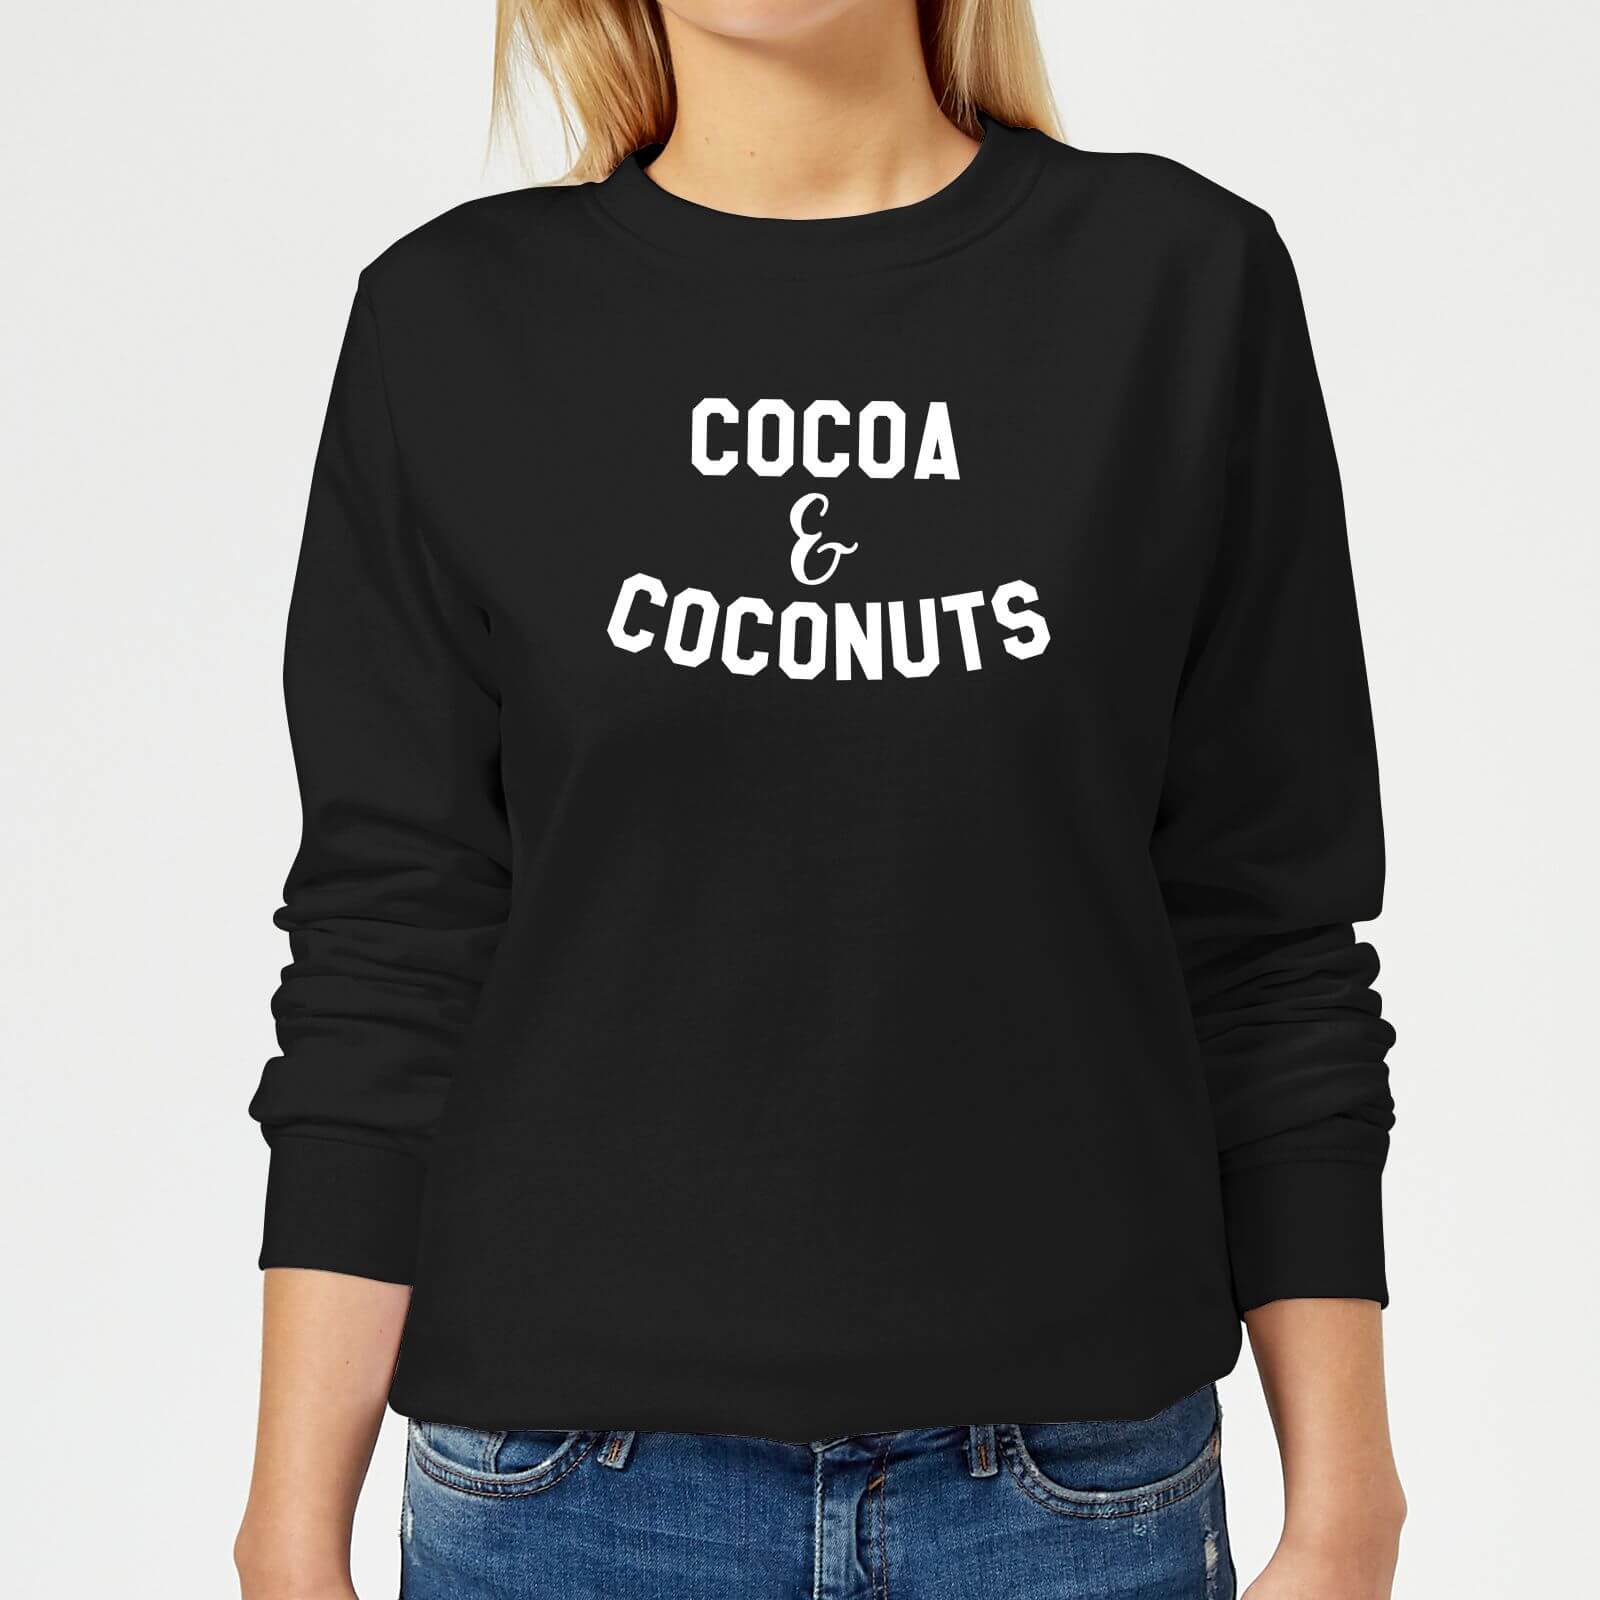 Cocoa and Coconuts Women's Sweatshirt - Black - 5XL - Black